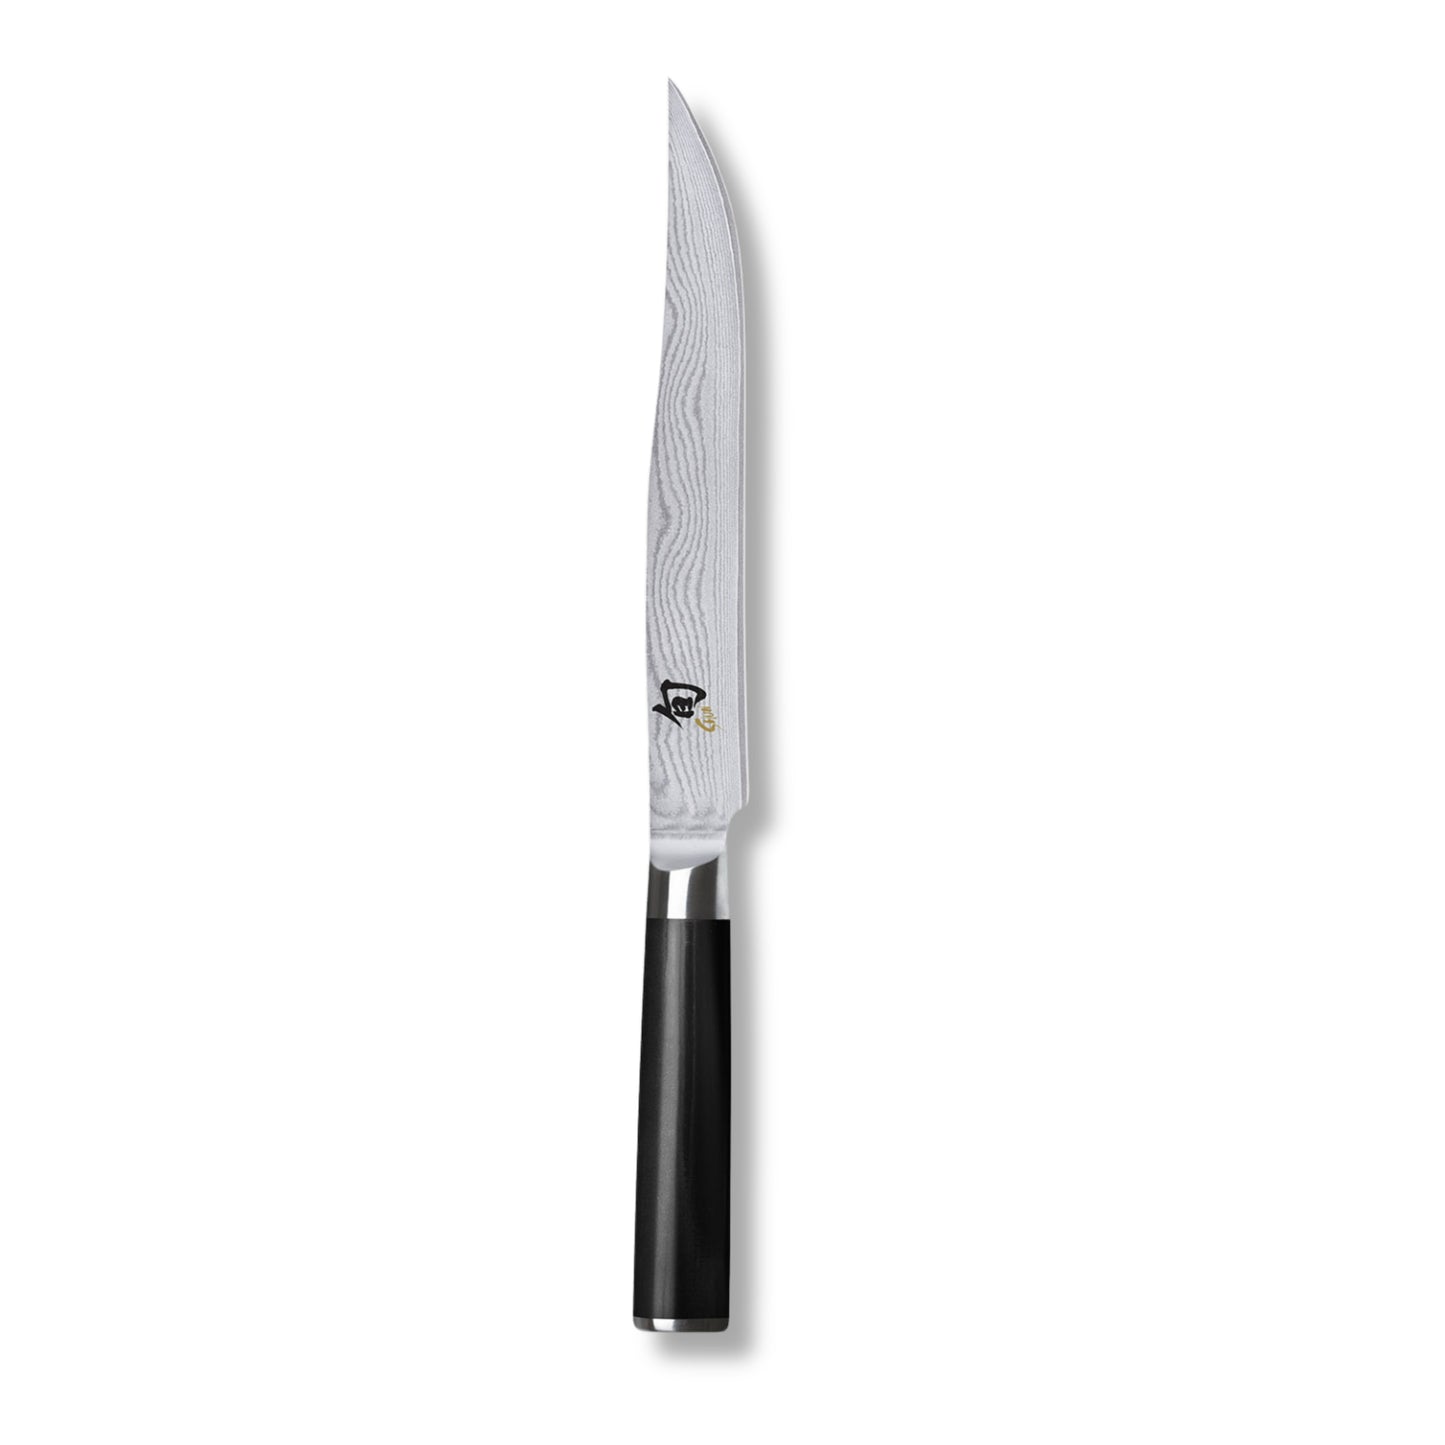 Kai Shun Carving knife & Fork set